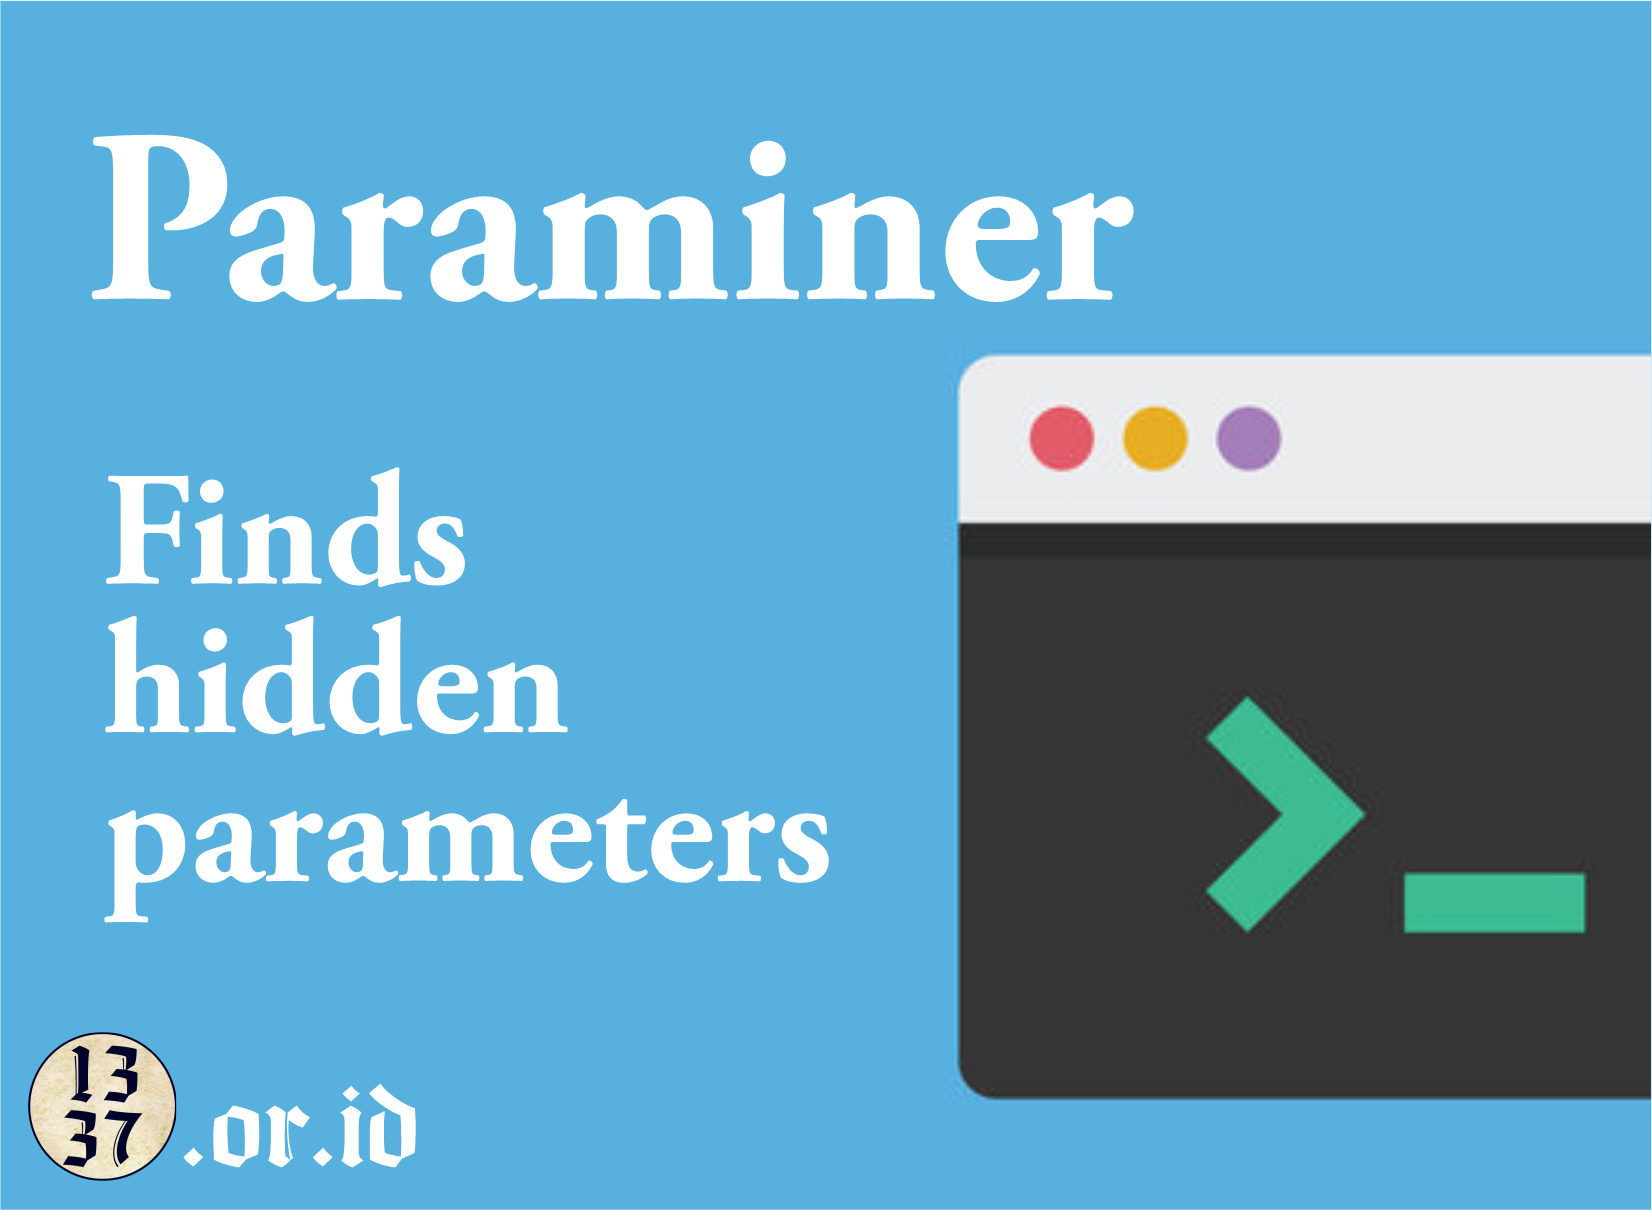 Paraminer: Finds hidden parameters.